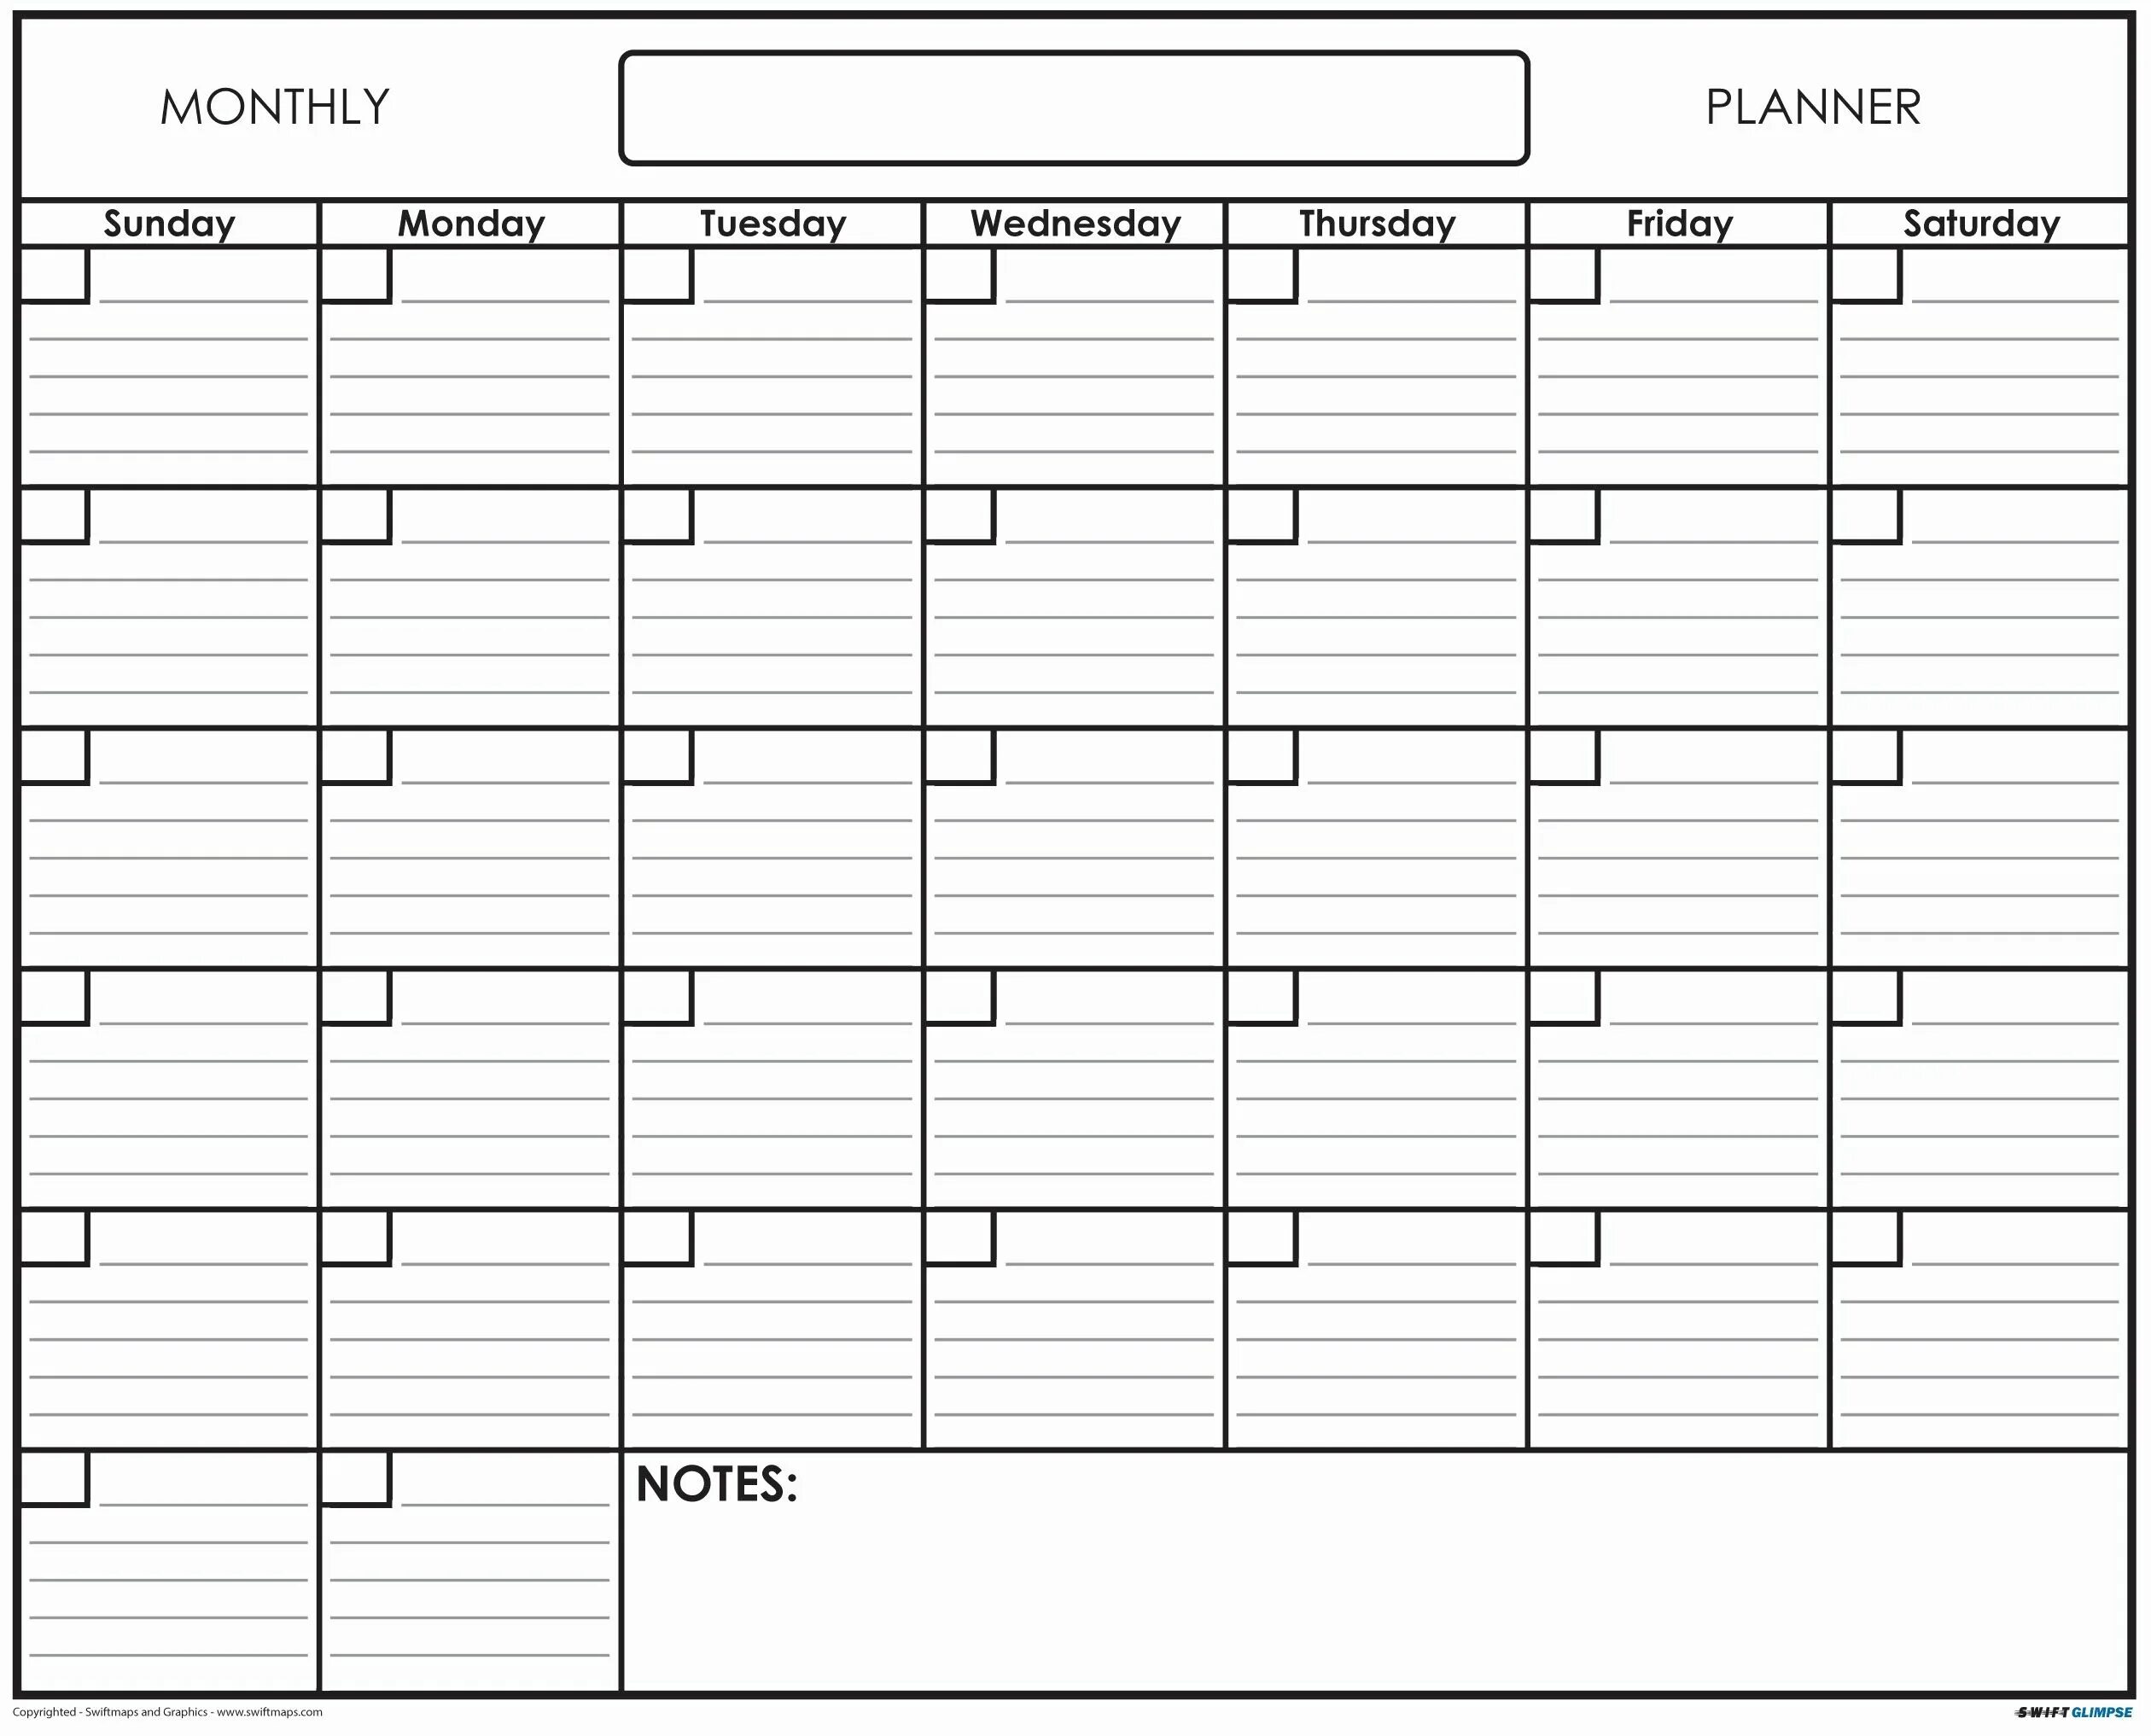 Планировщик на месяц. Календарь план. Планинг на месяц. Планирование на месяц.